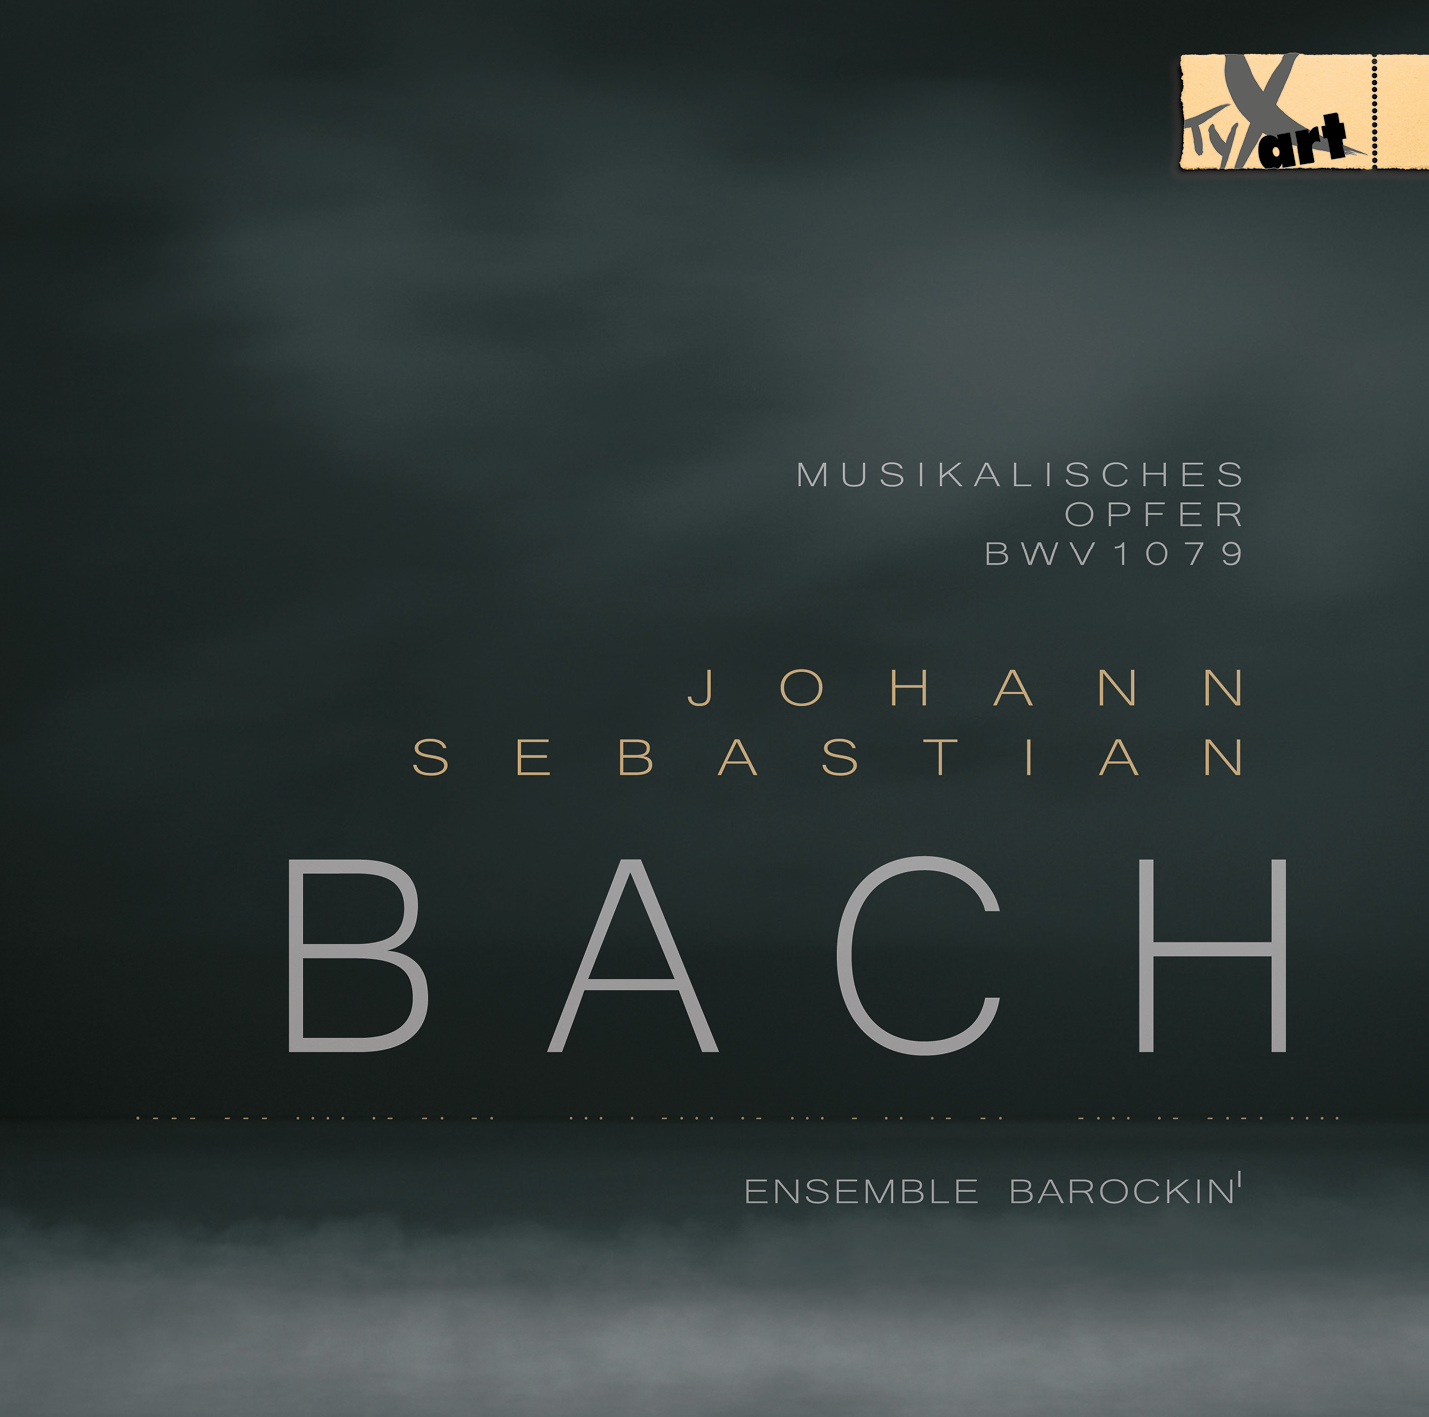 Bach - Musikalisches Opfer - Ensemble Barockin'